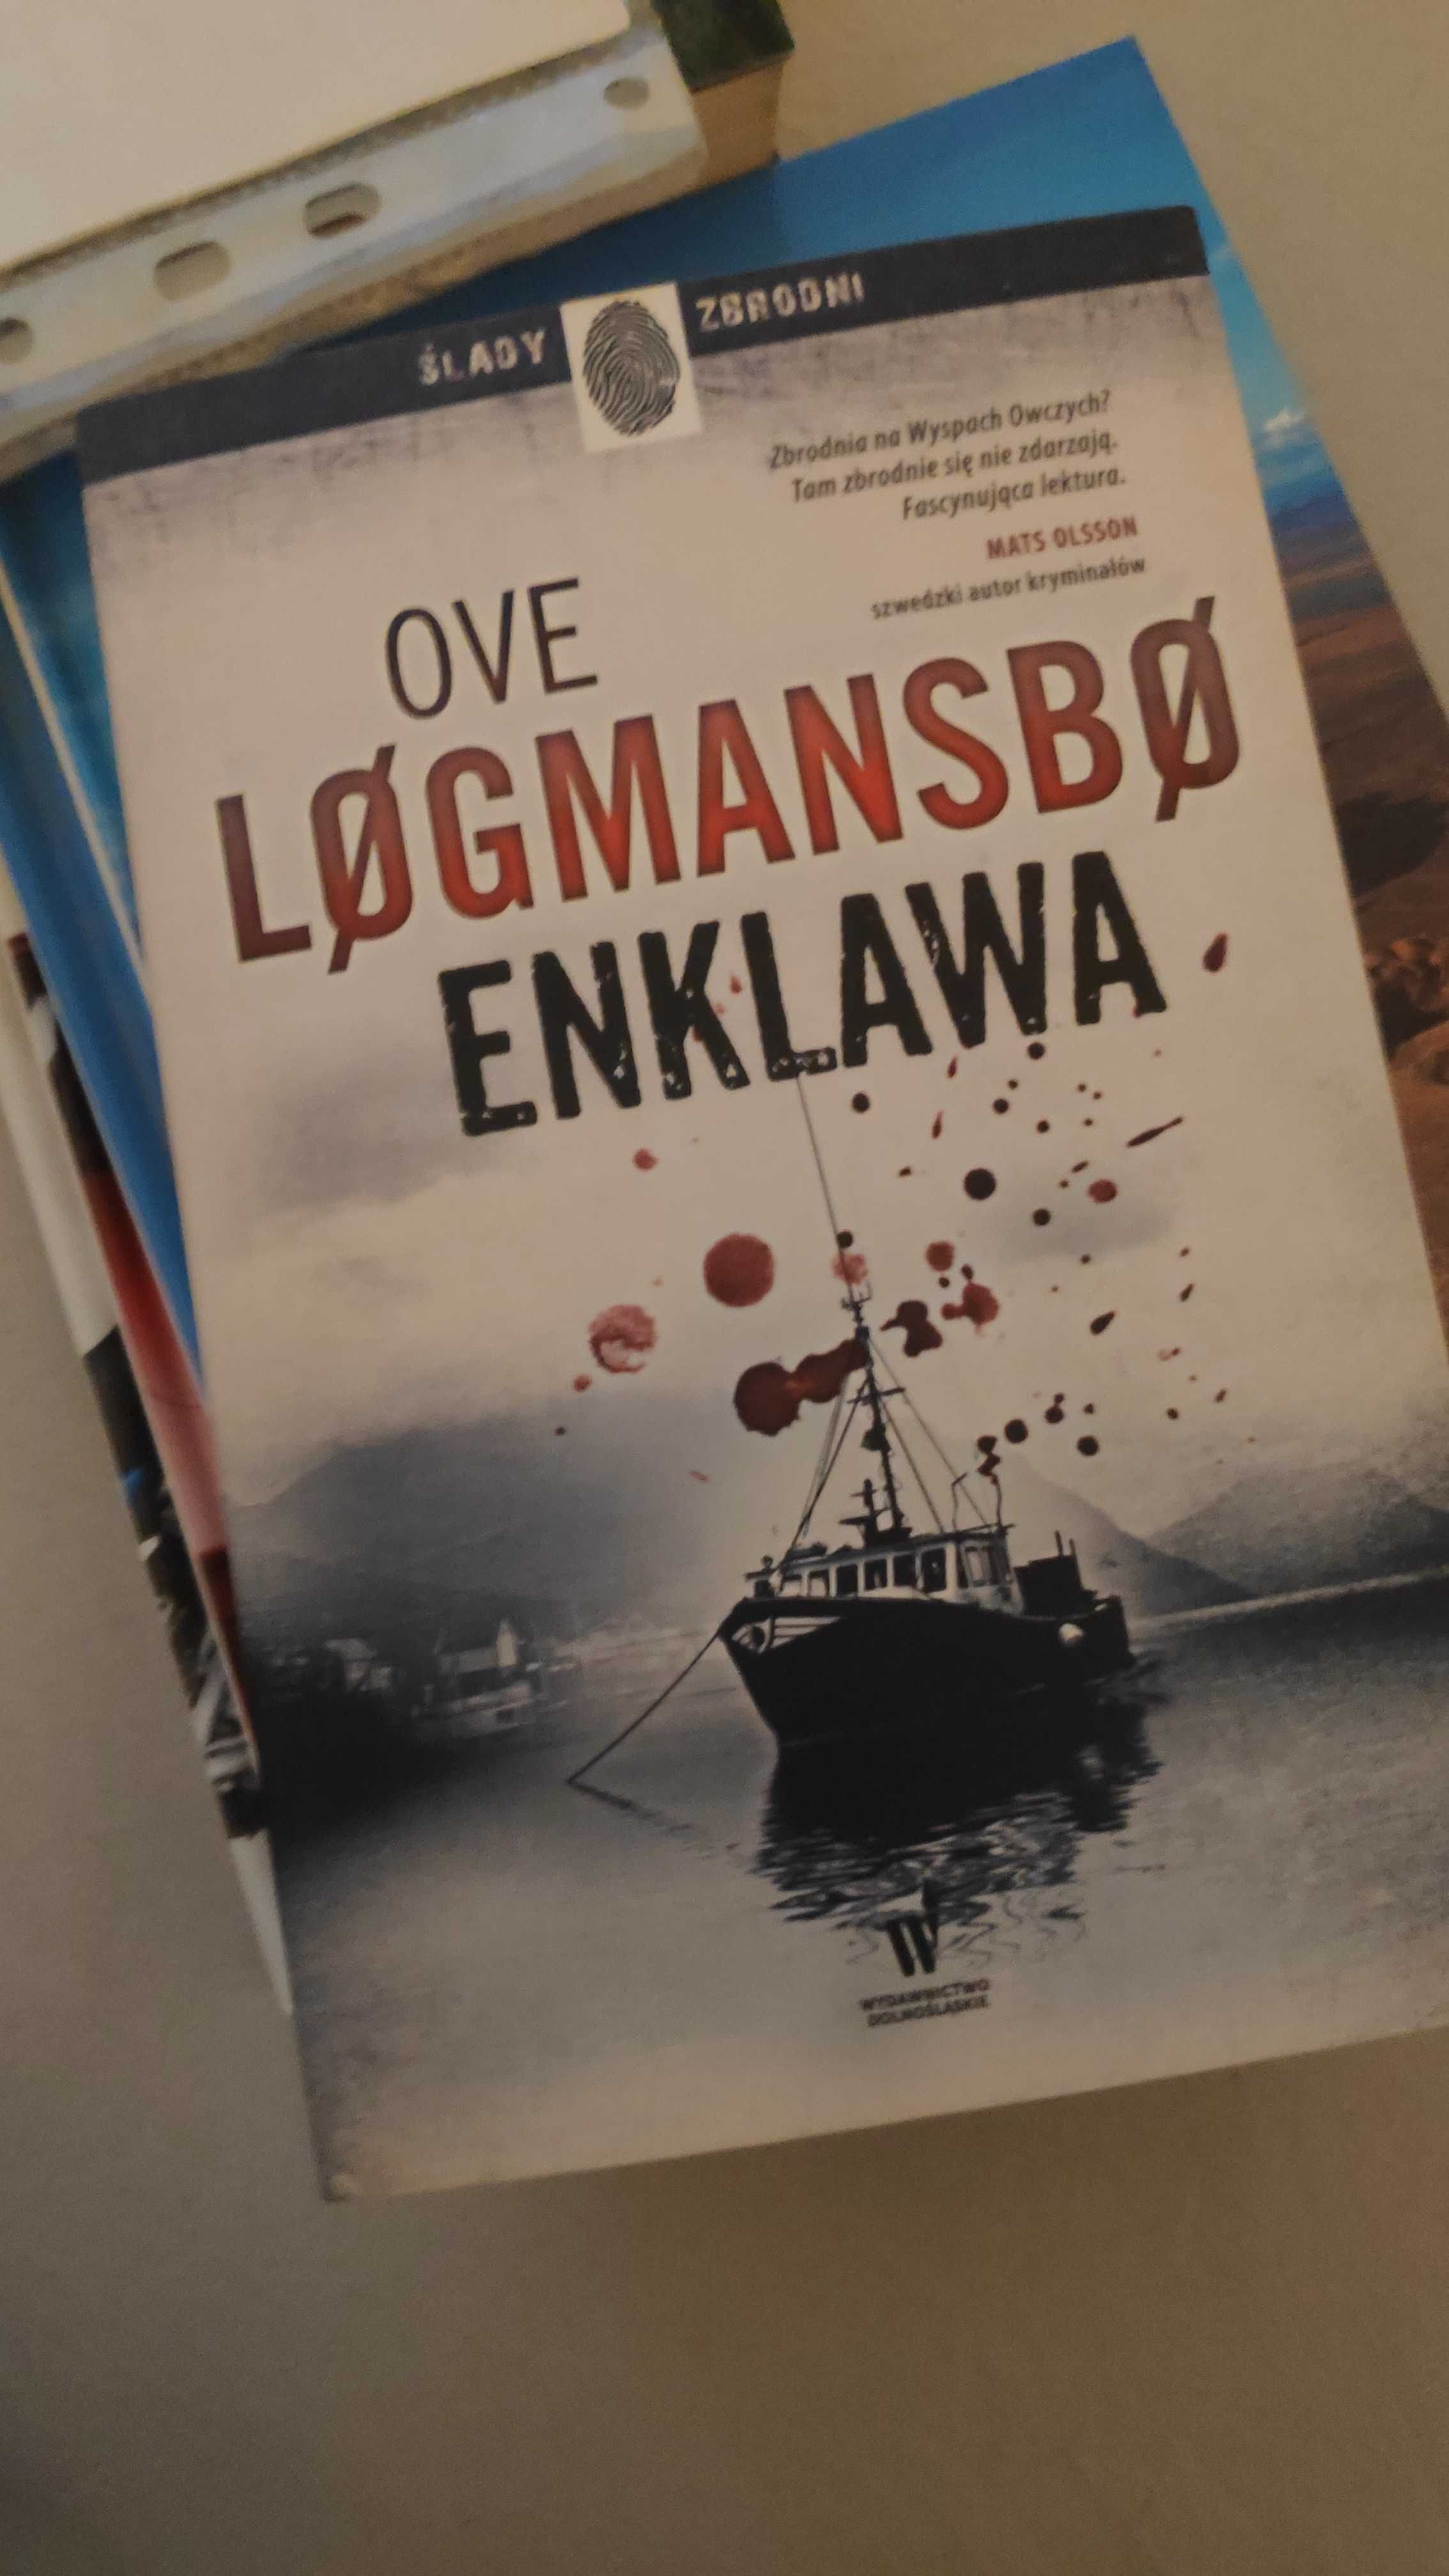 Enklawa
Ove Løgmansbø